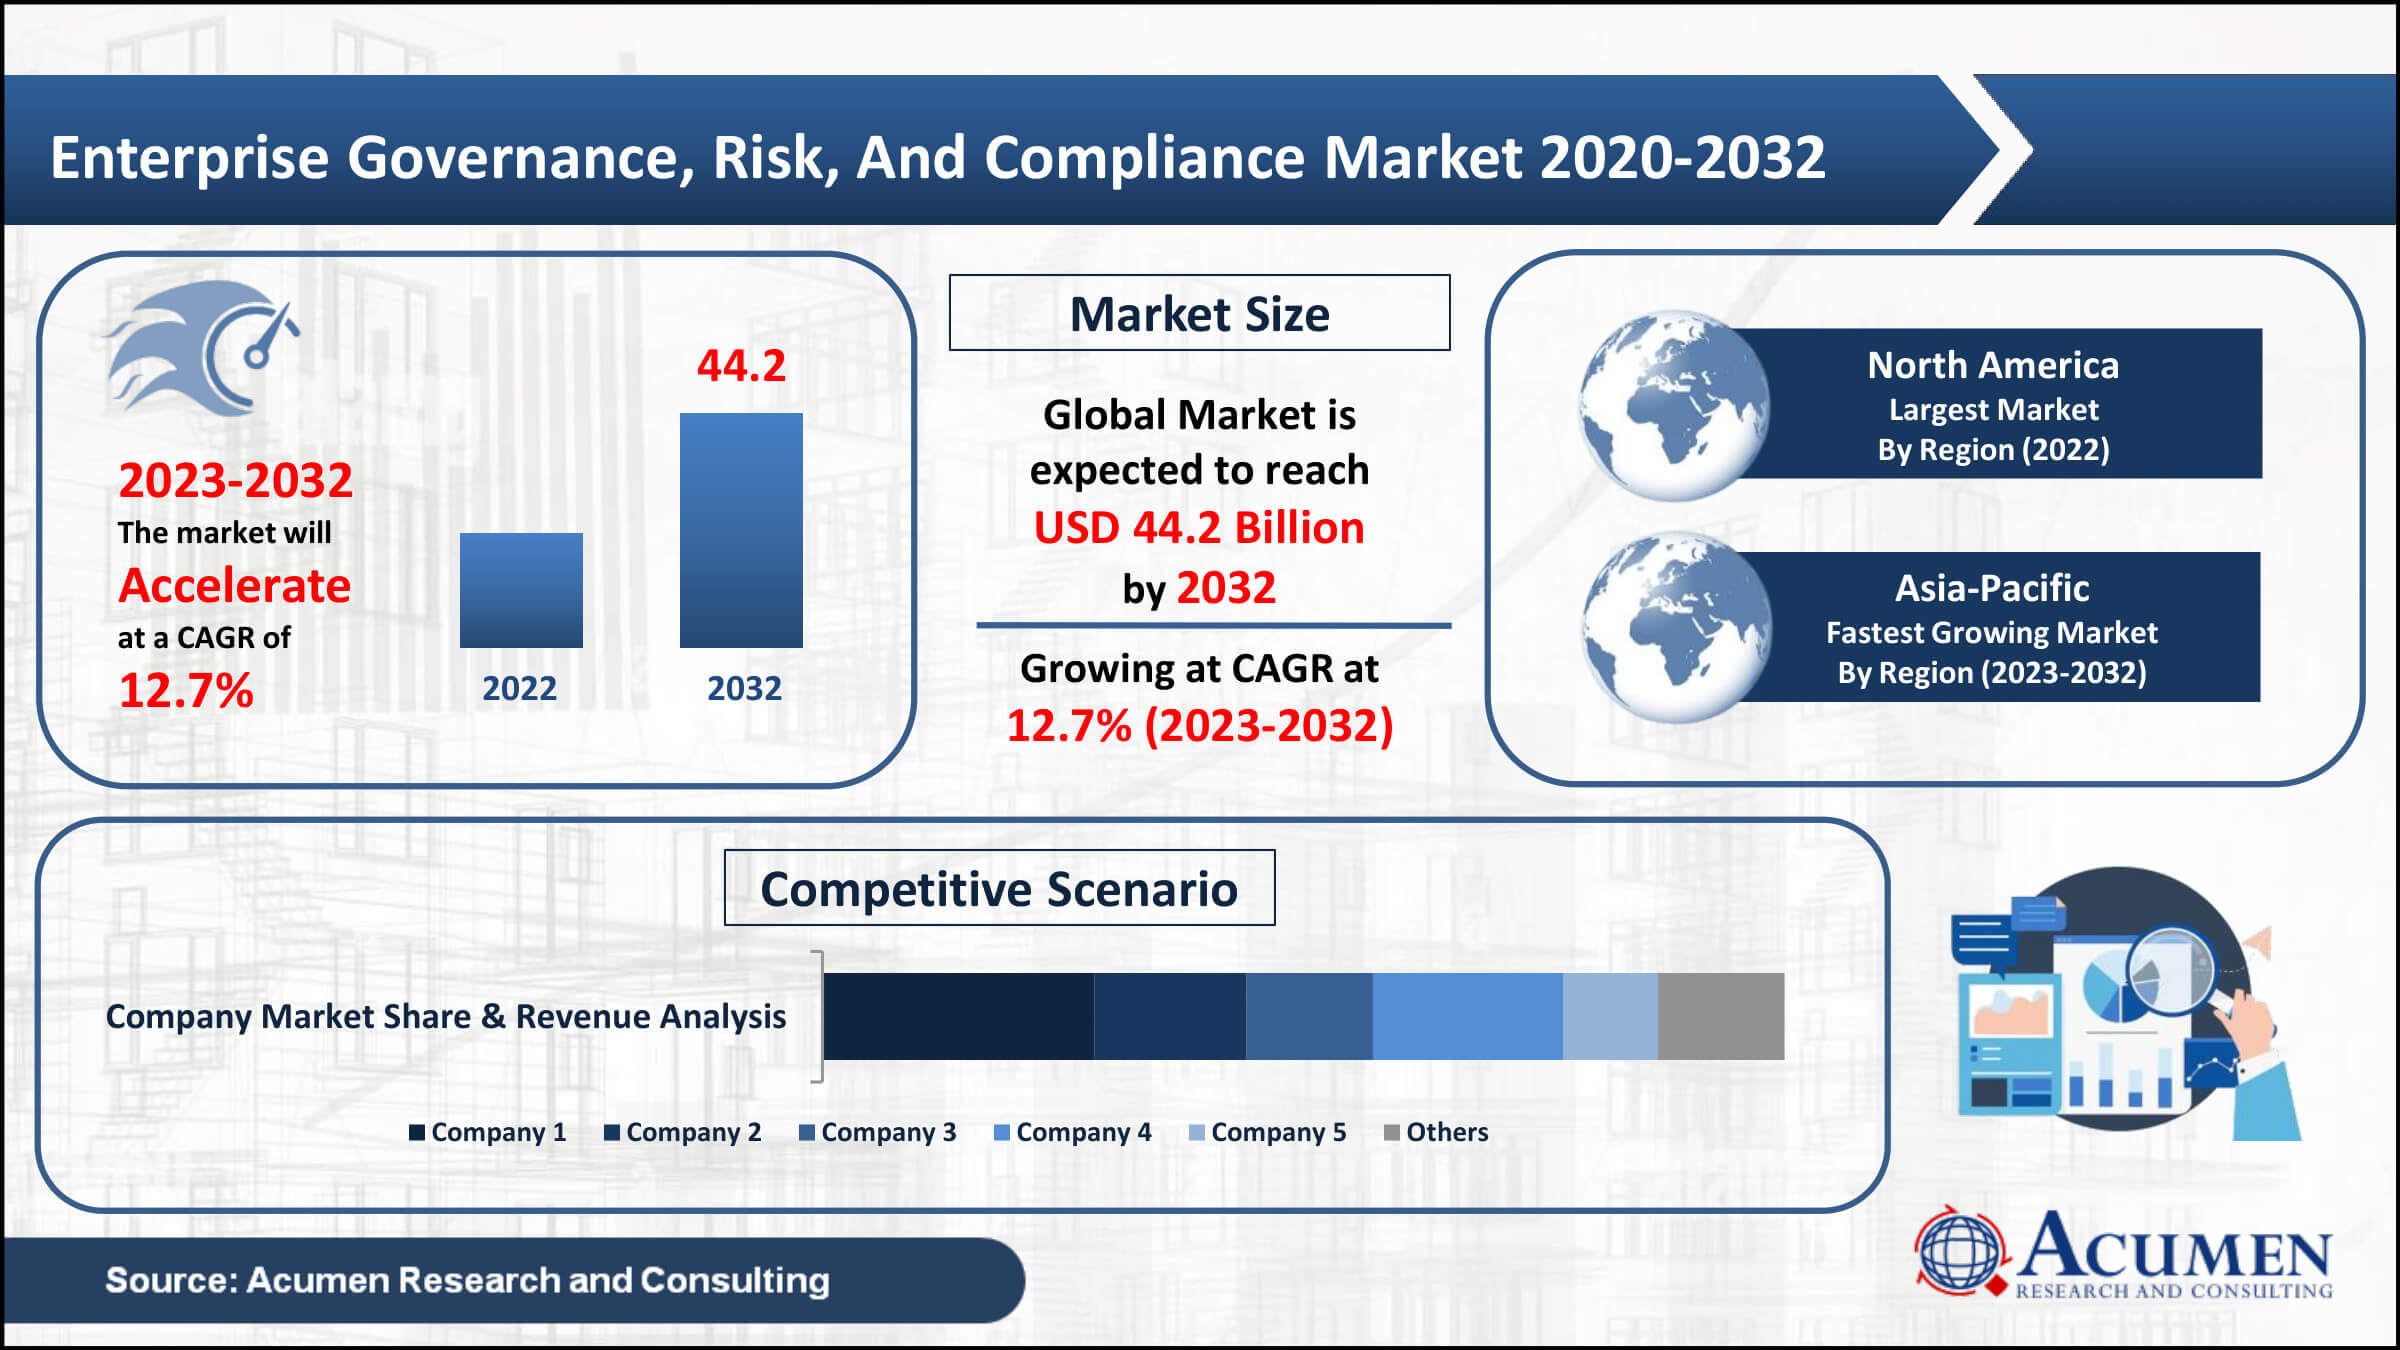 Enterprise Governance, Risk, and Compliance Market Analysis